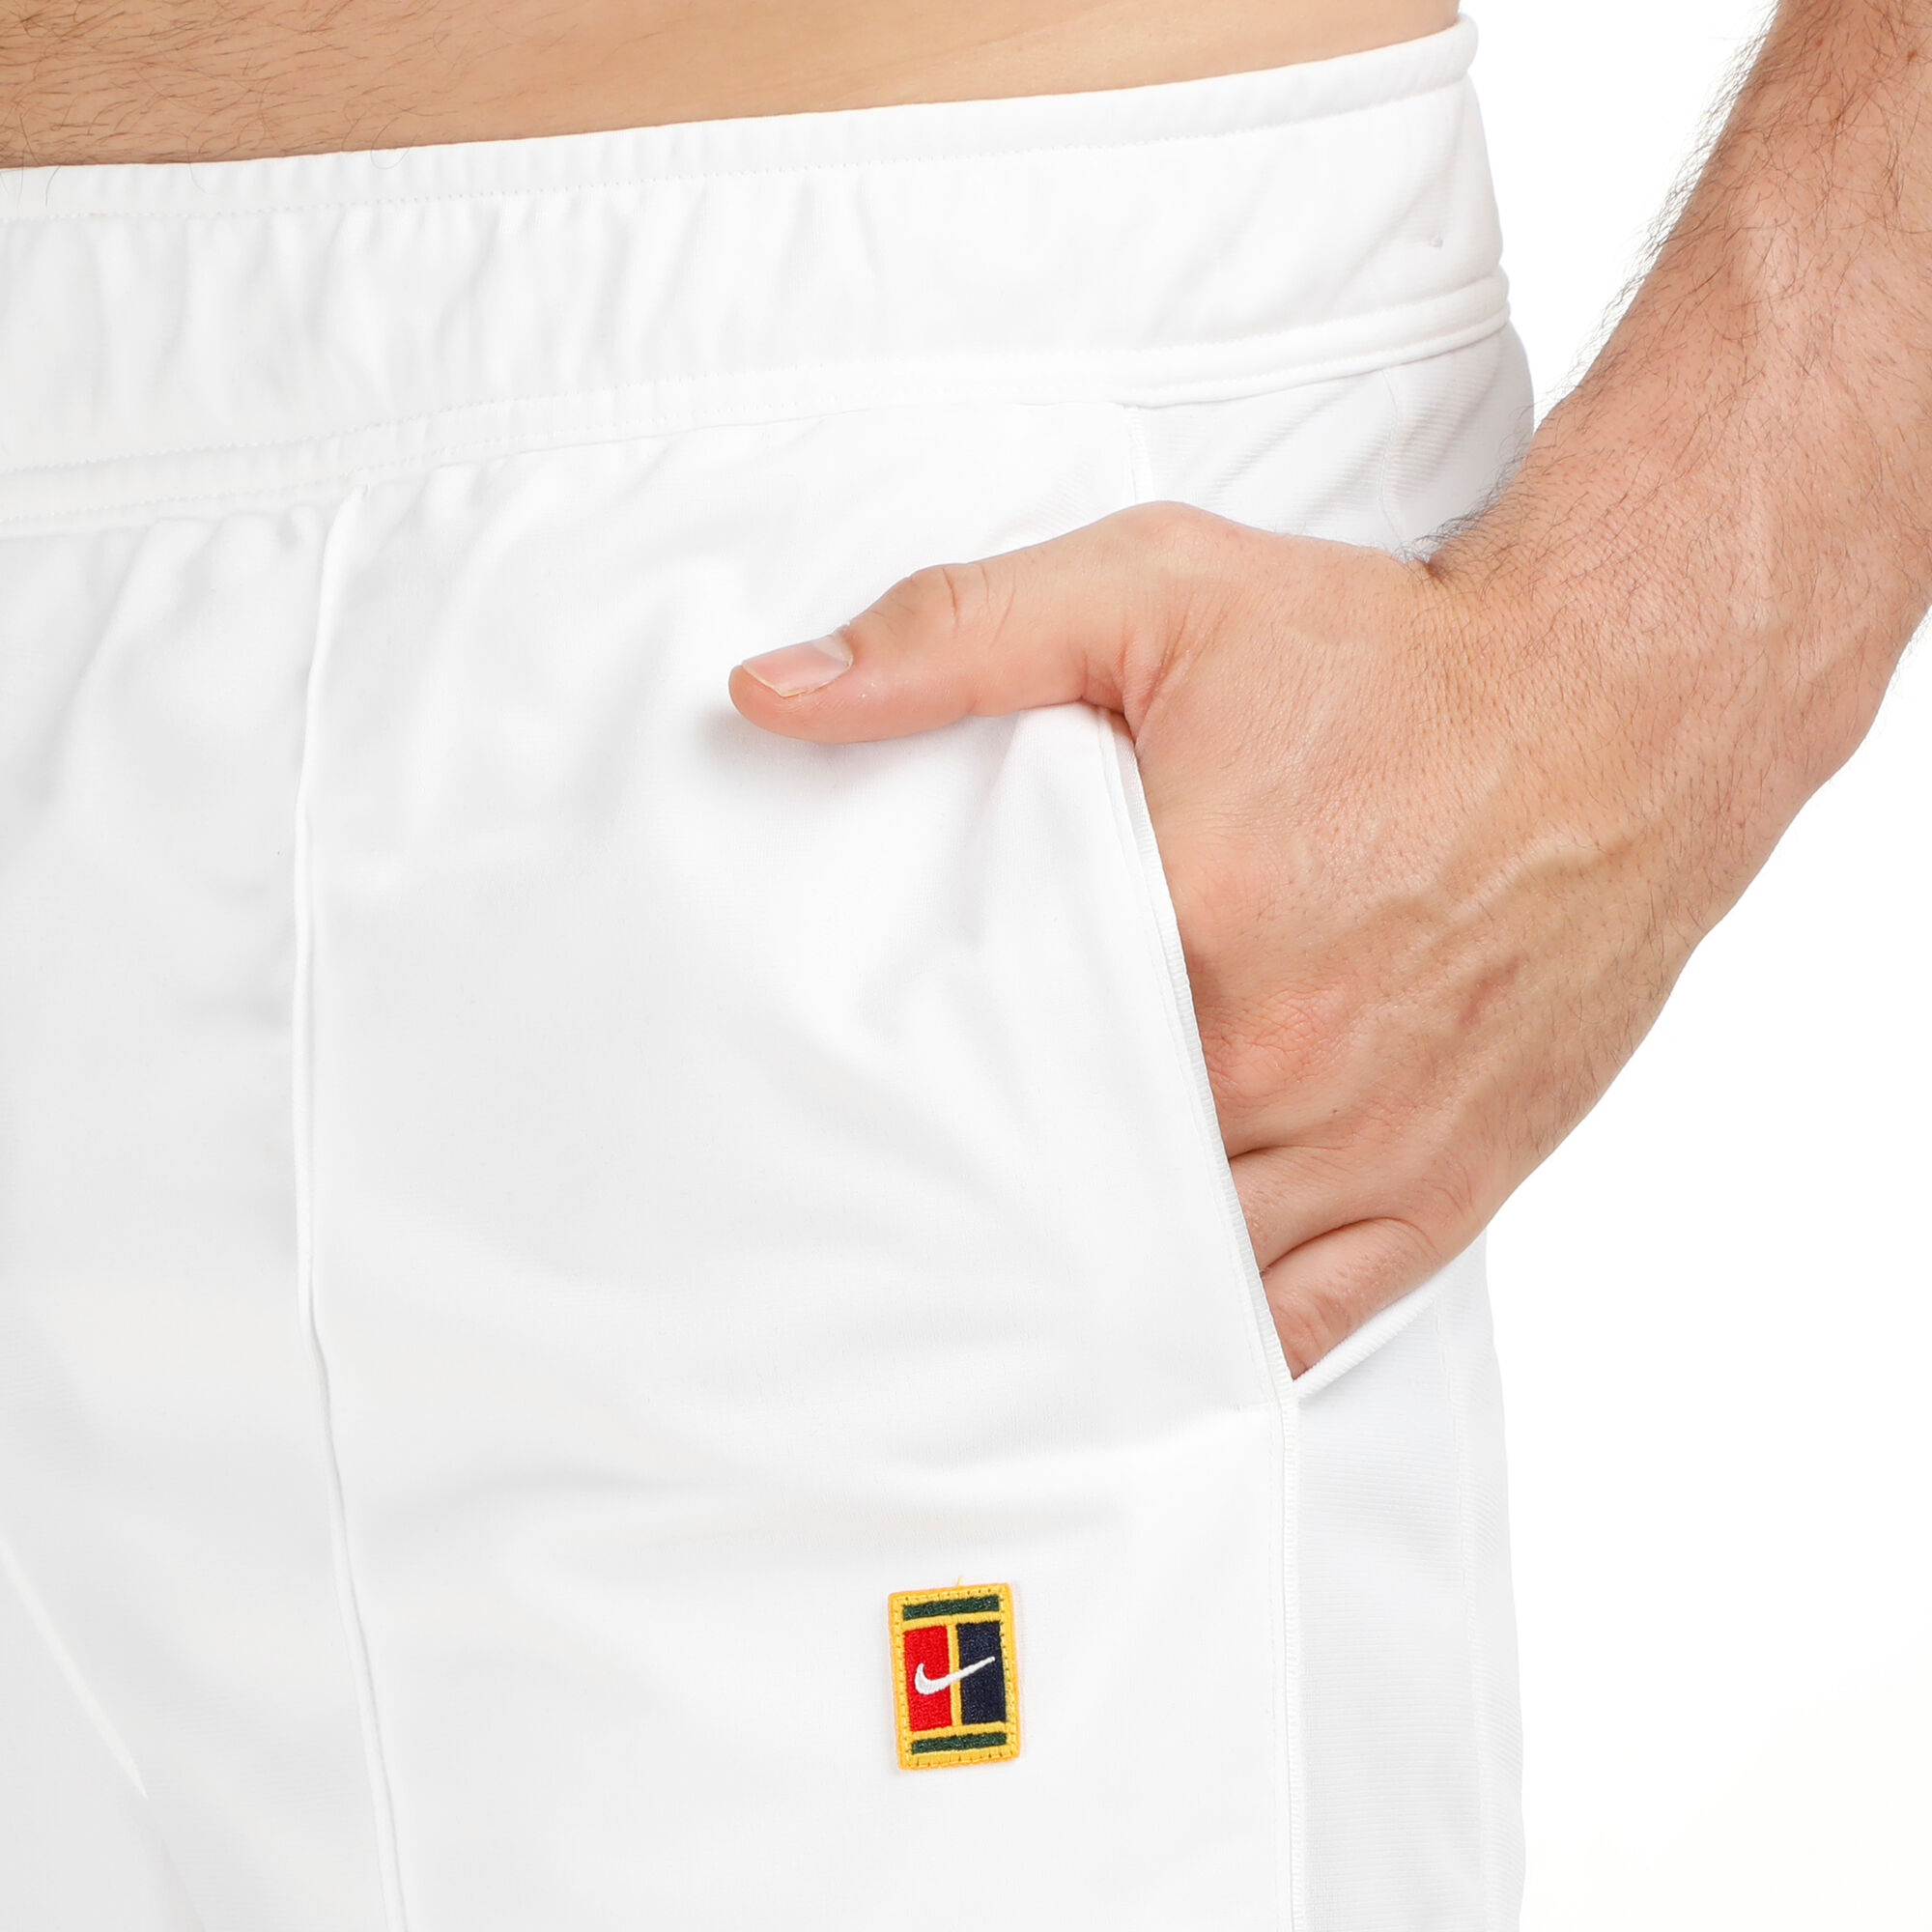 Buy Nike Heritage Suit Training Pants Men White online